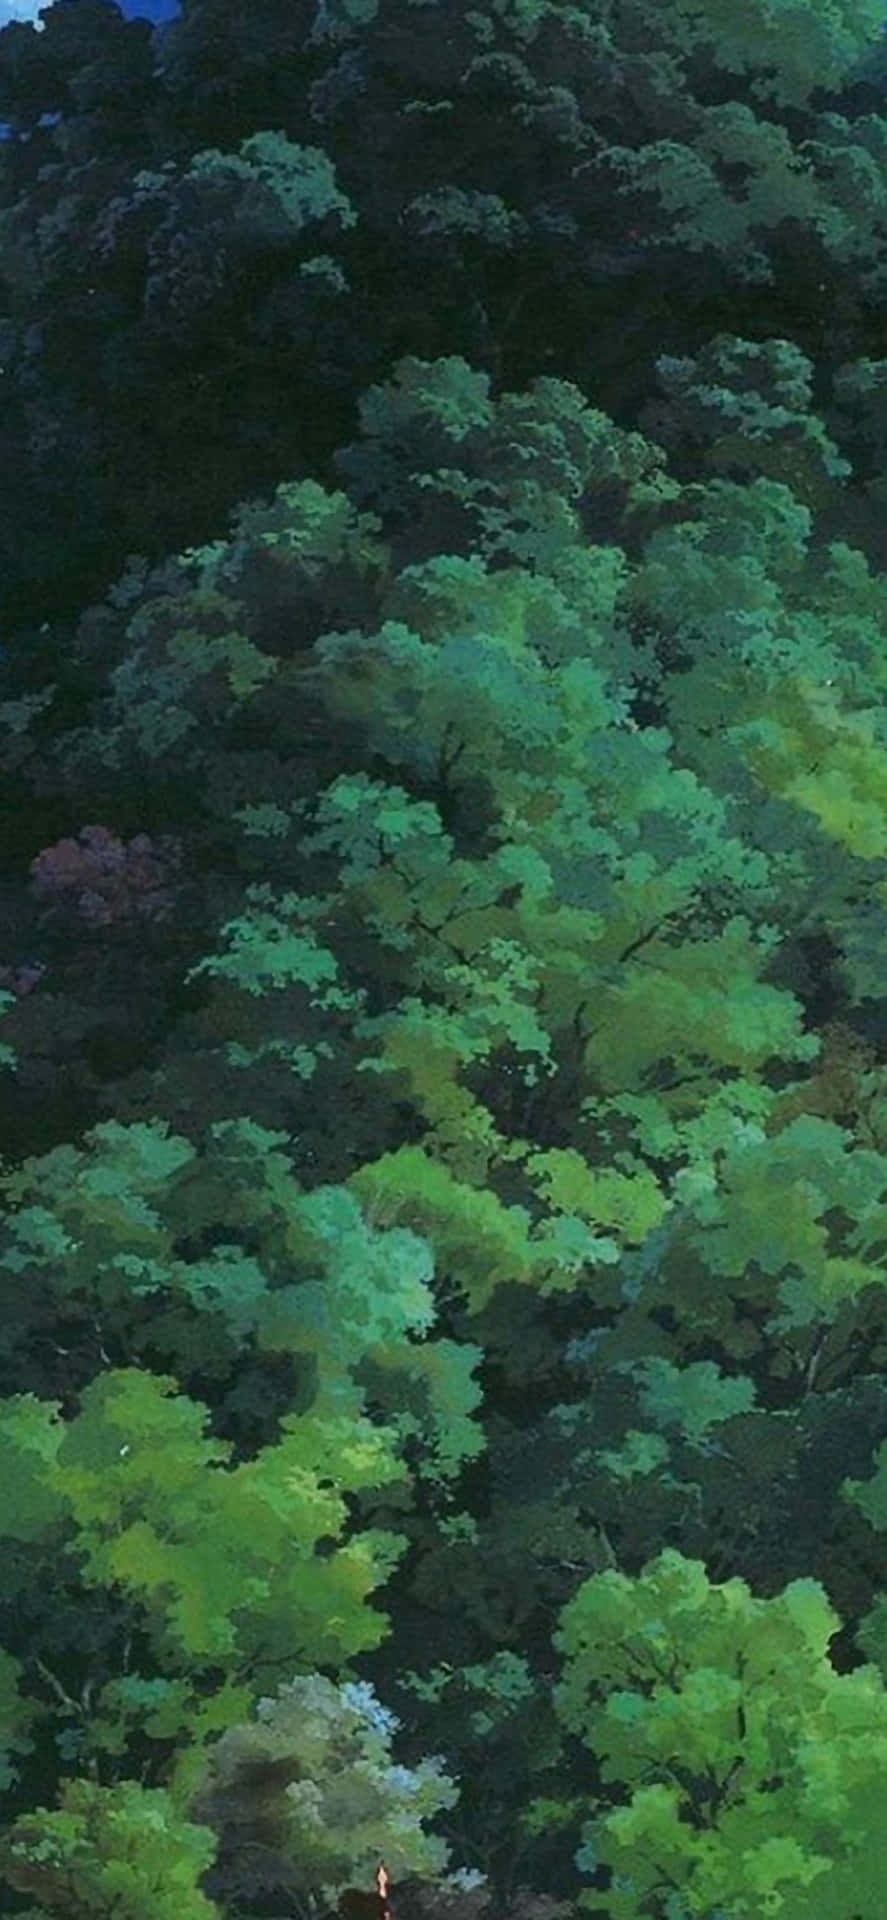 Vandregennem Den Smukke Aesthetic Ghibli, Illustreret Af Den Berømte Filmmager Hayao Miyazaki. Wallpaper